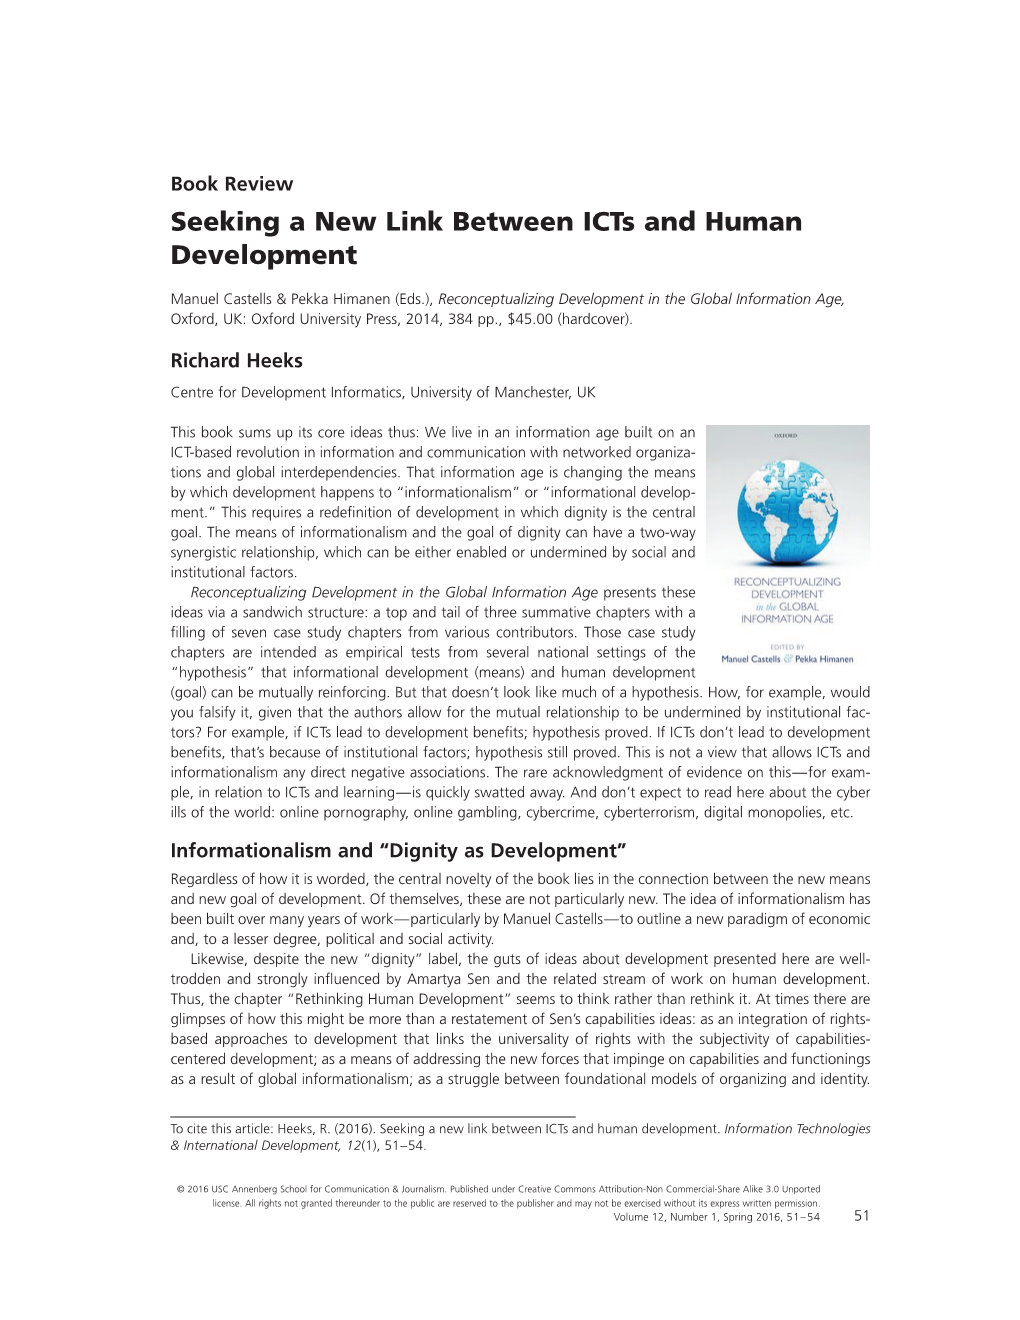 Seeking a New Link Between Icts and Human Development HEEKS